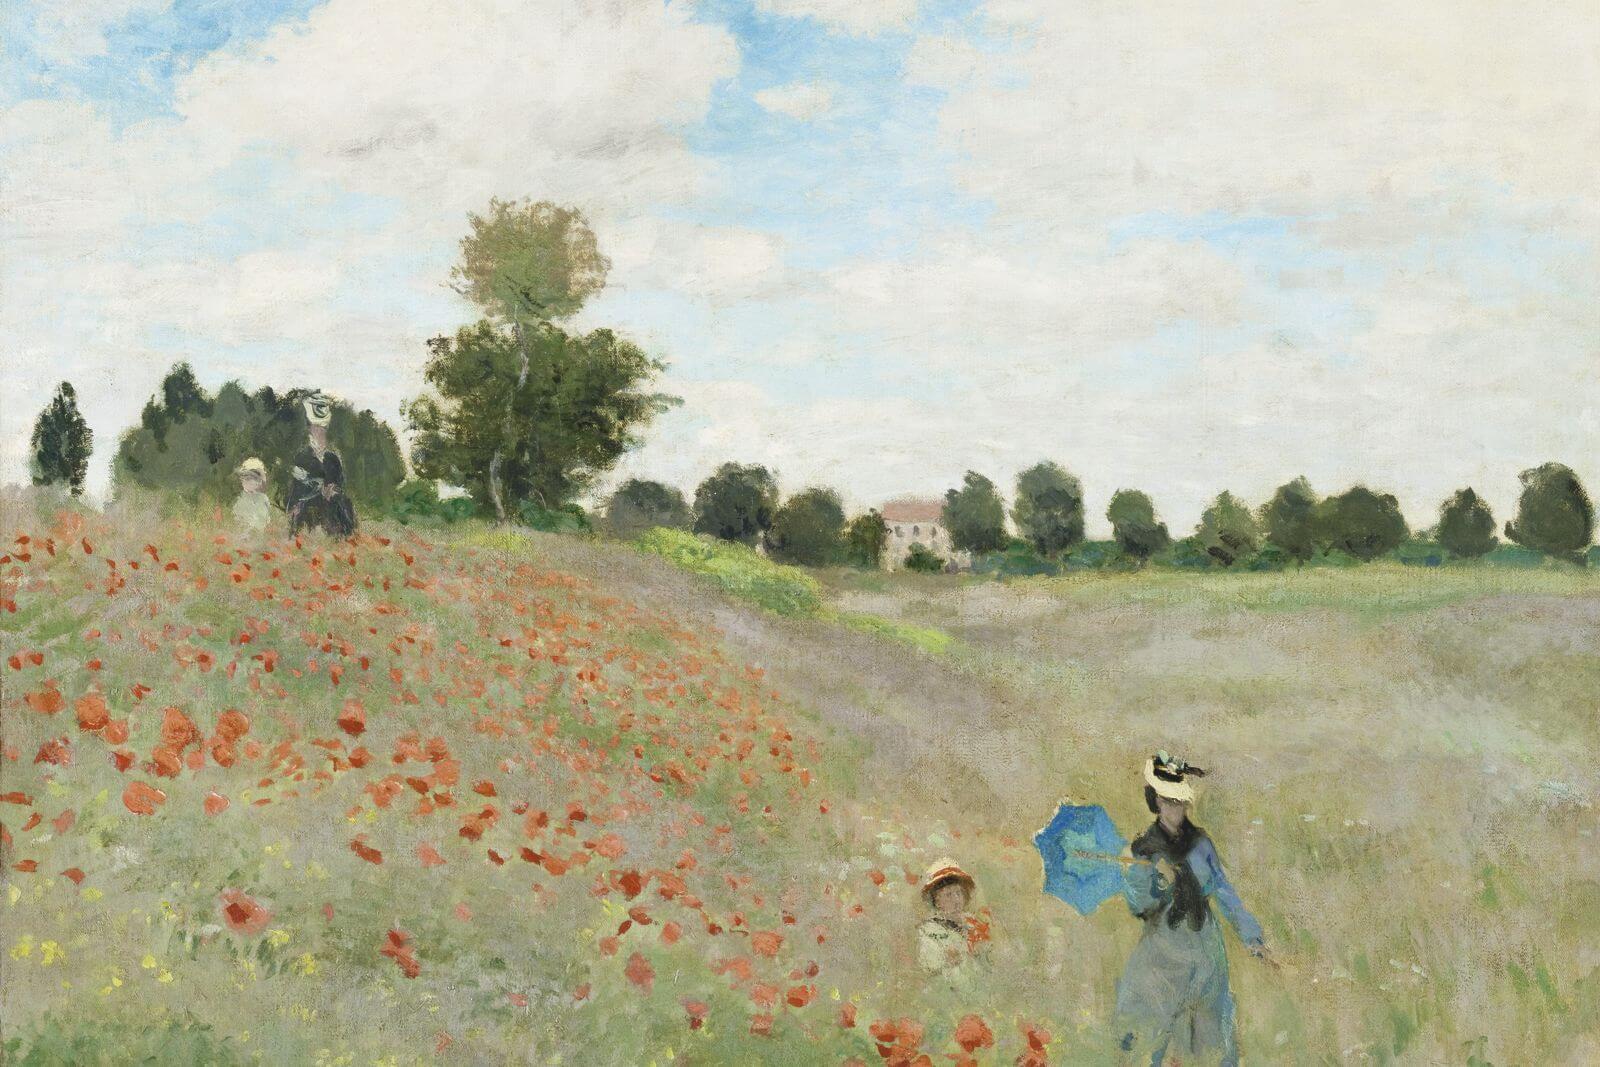 Cuadro en lienzo, Claude Monet, Poppies. Campo de amapolas